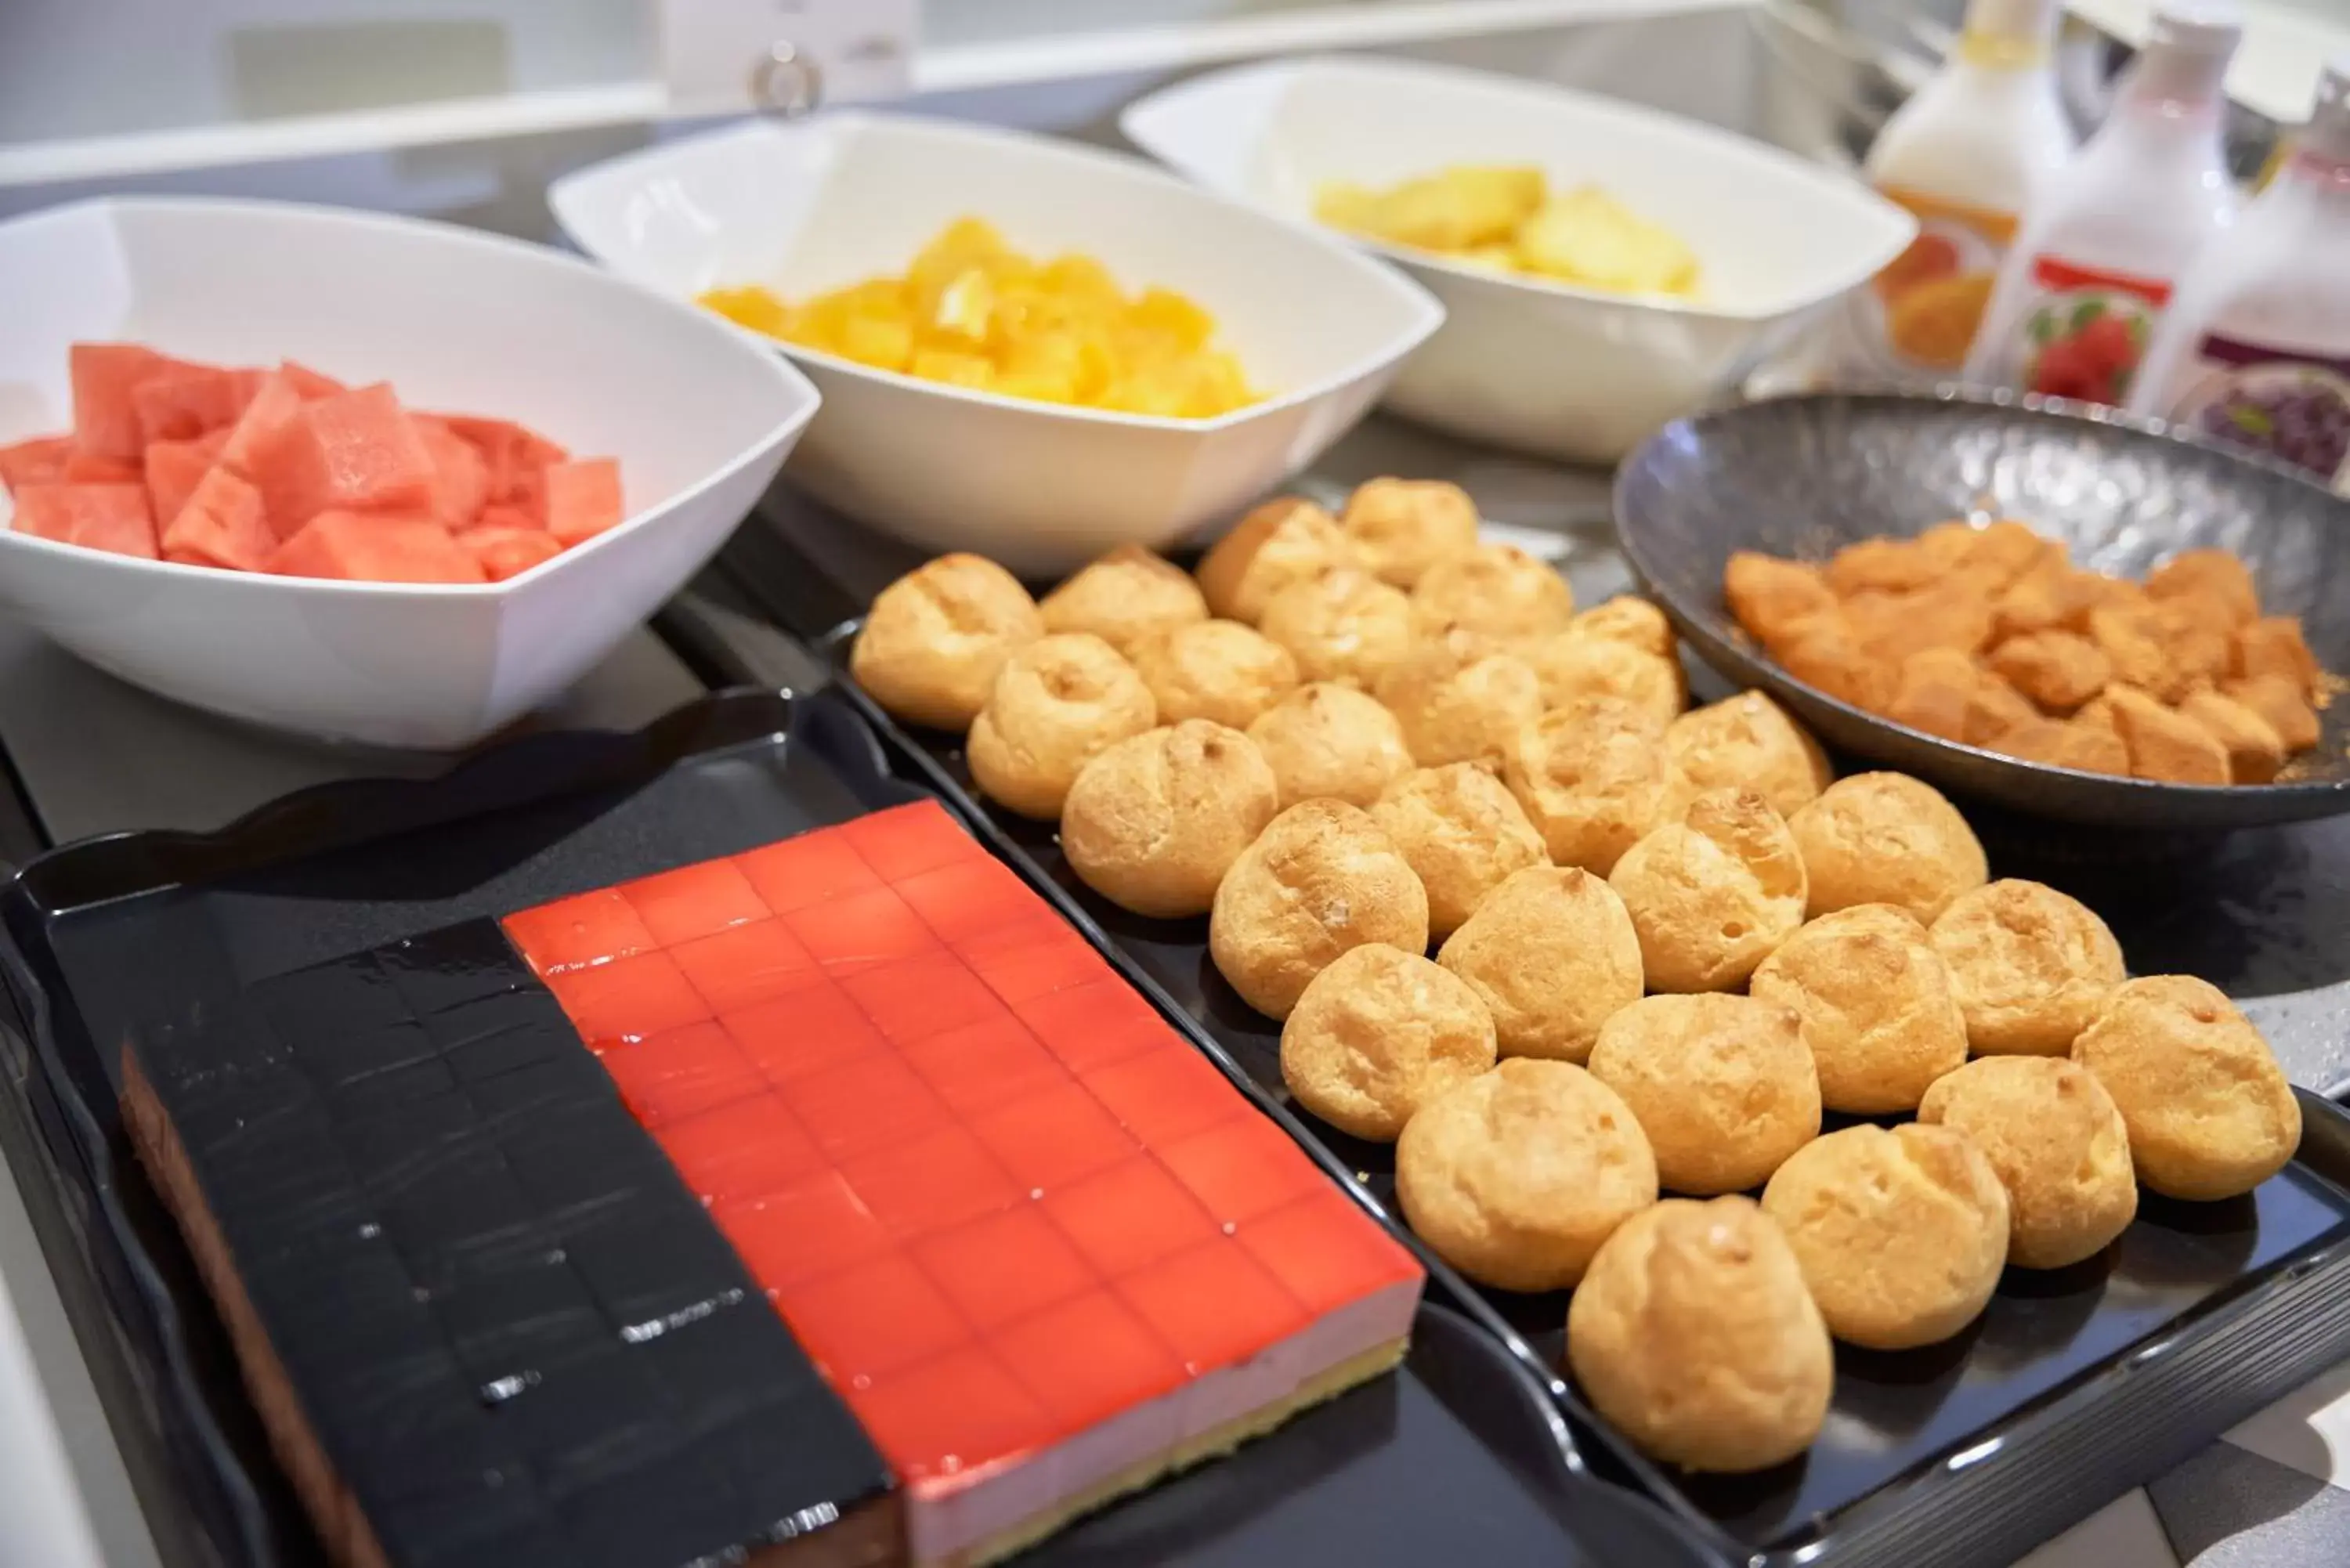 Buffet breakfast in Hotel Intergate Kanazawa